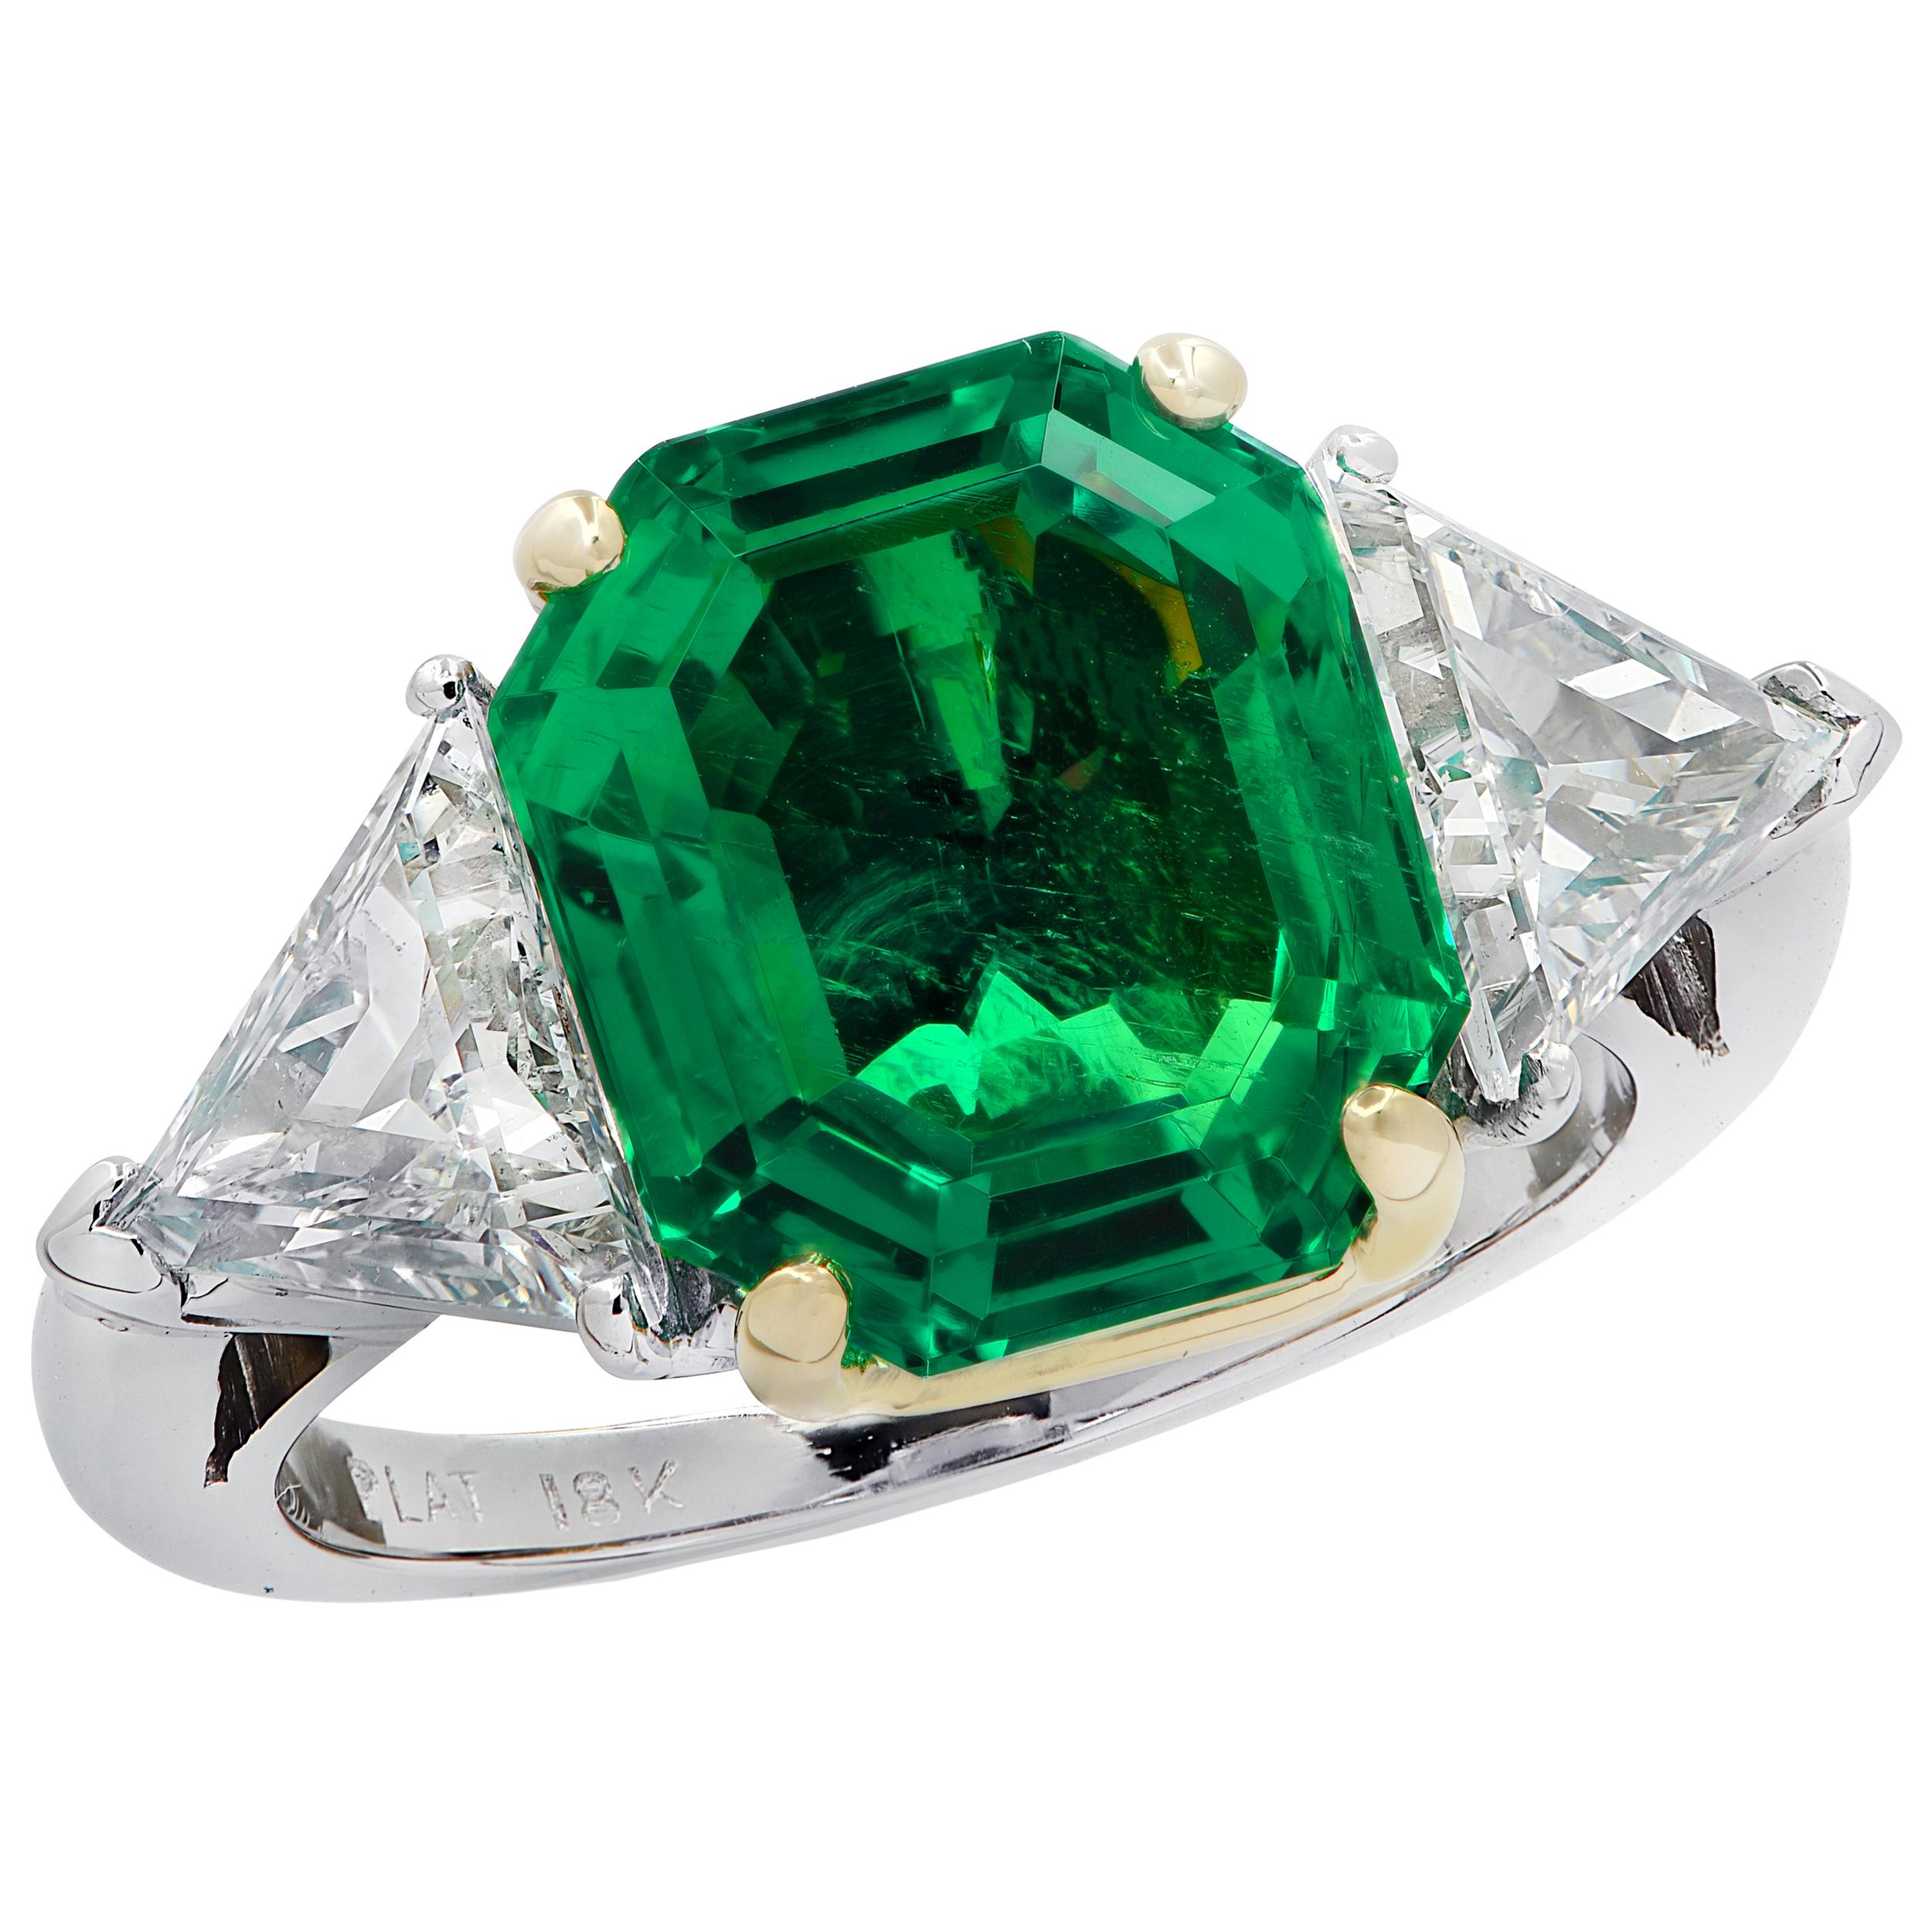 Vivid Diamonds AGL Certified 4.98 Carat Emerald Cut Emerald Ring